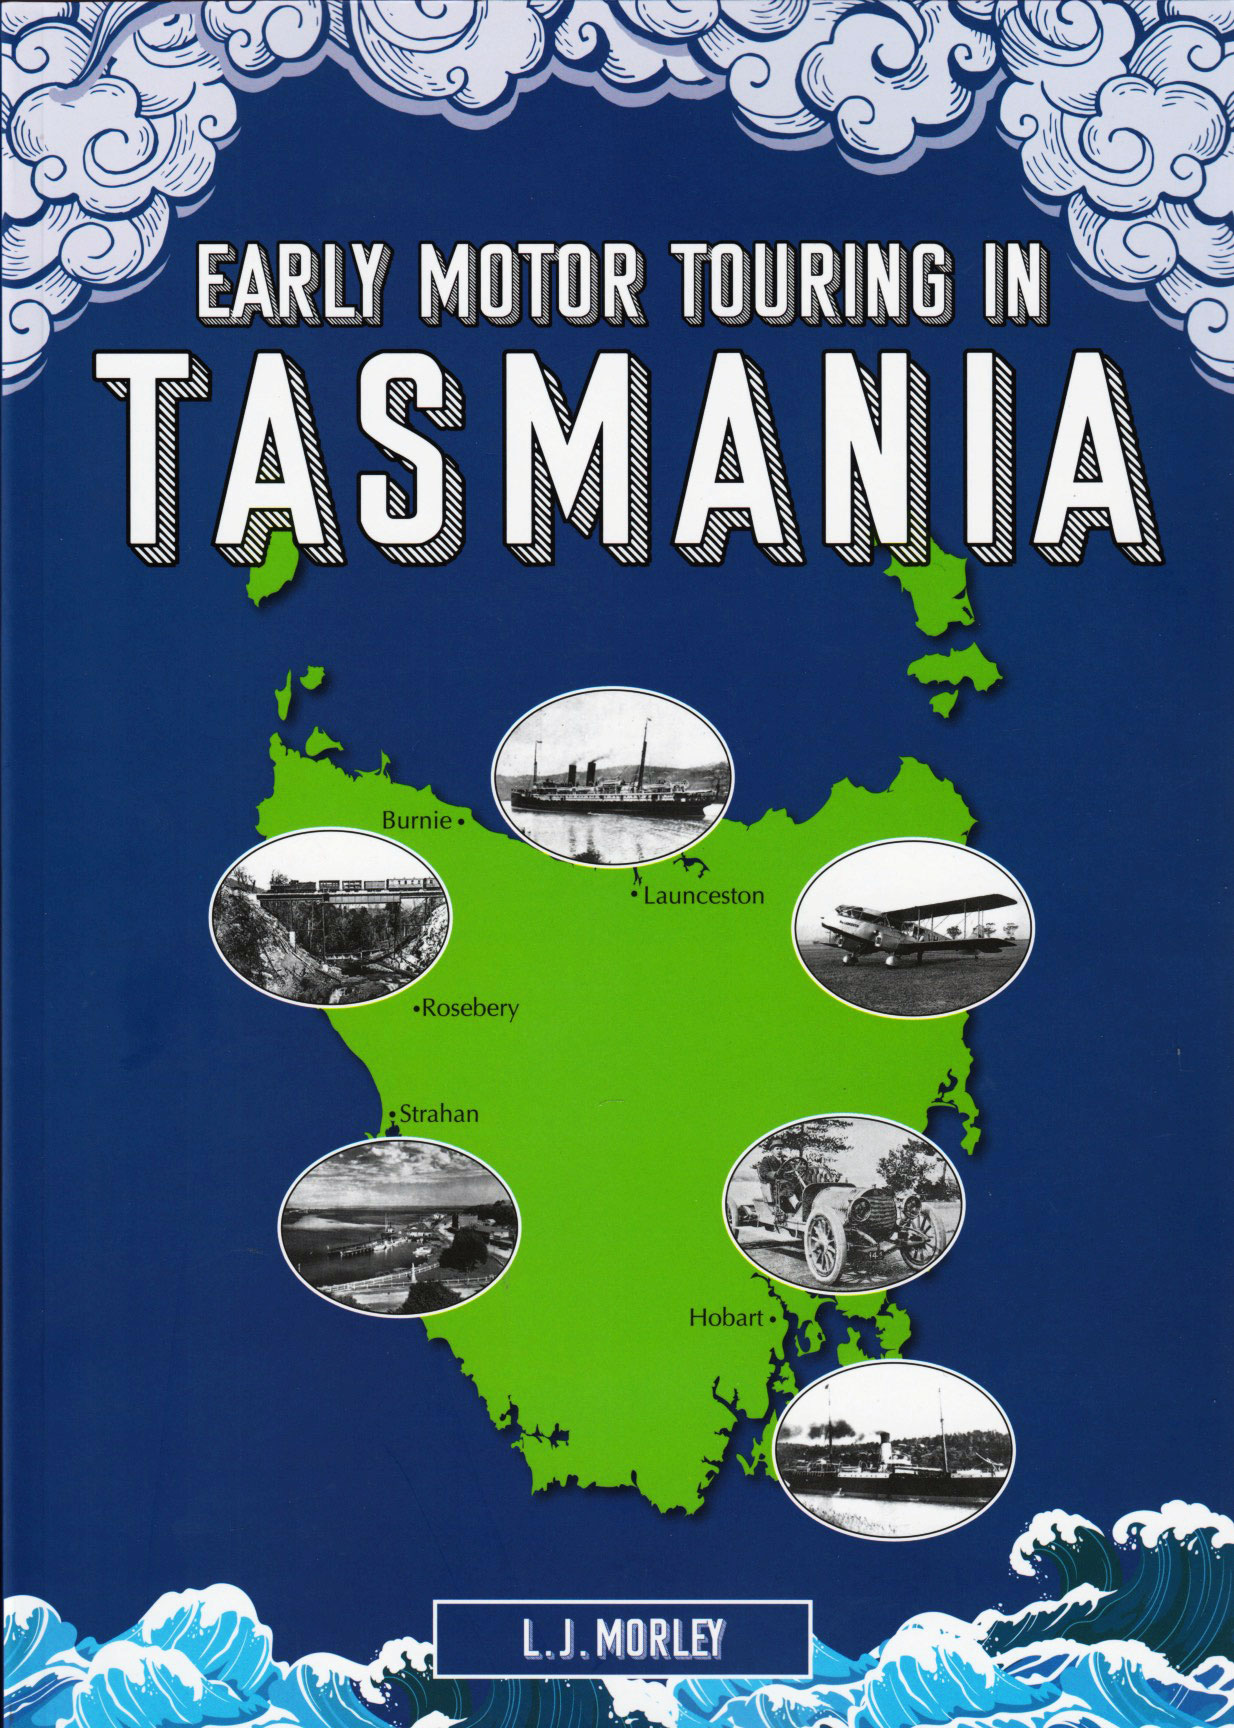 Early Motoring in Tasmania